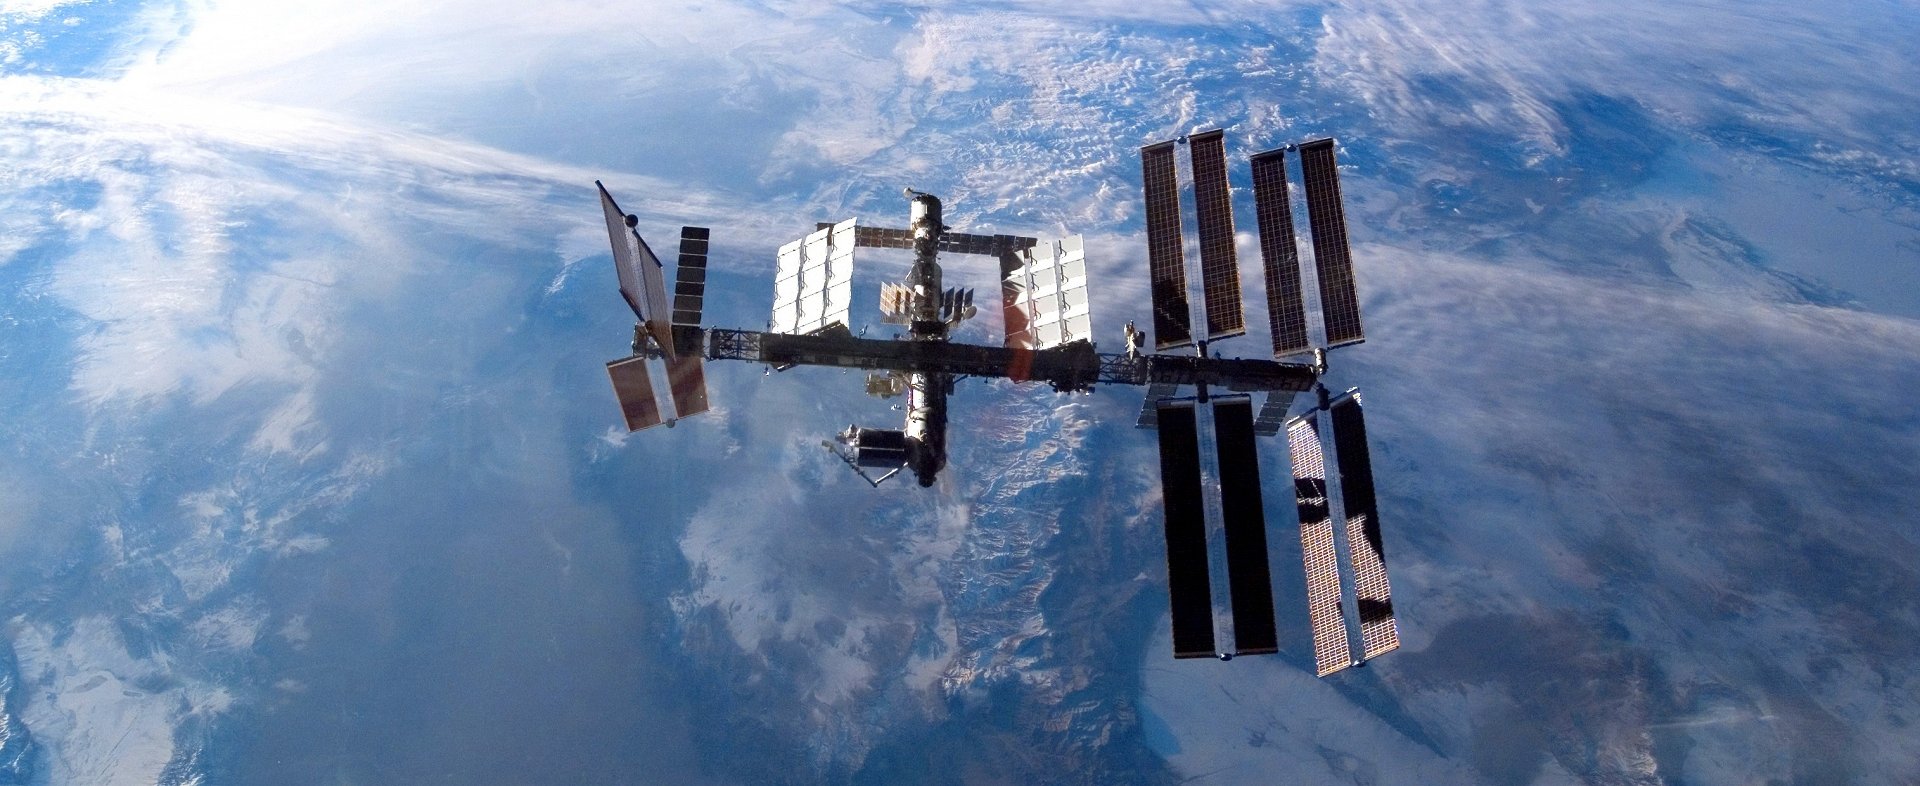 international_space_station_seen_from_space_shuttle_atlantis.jpg